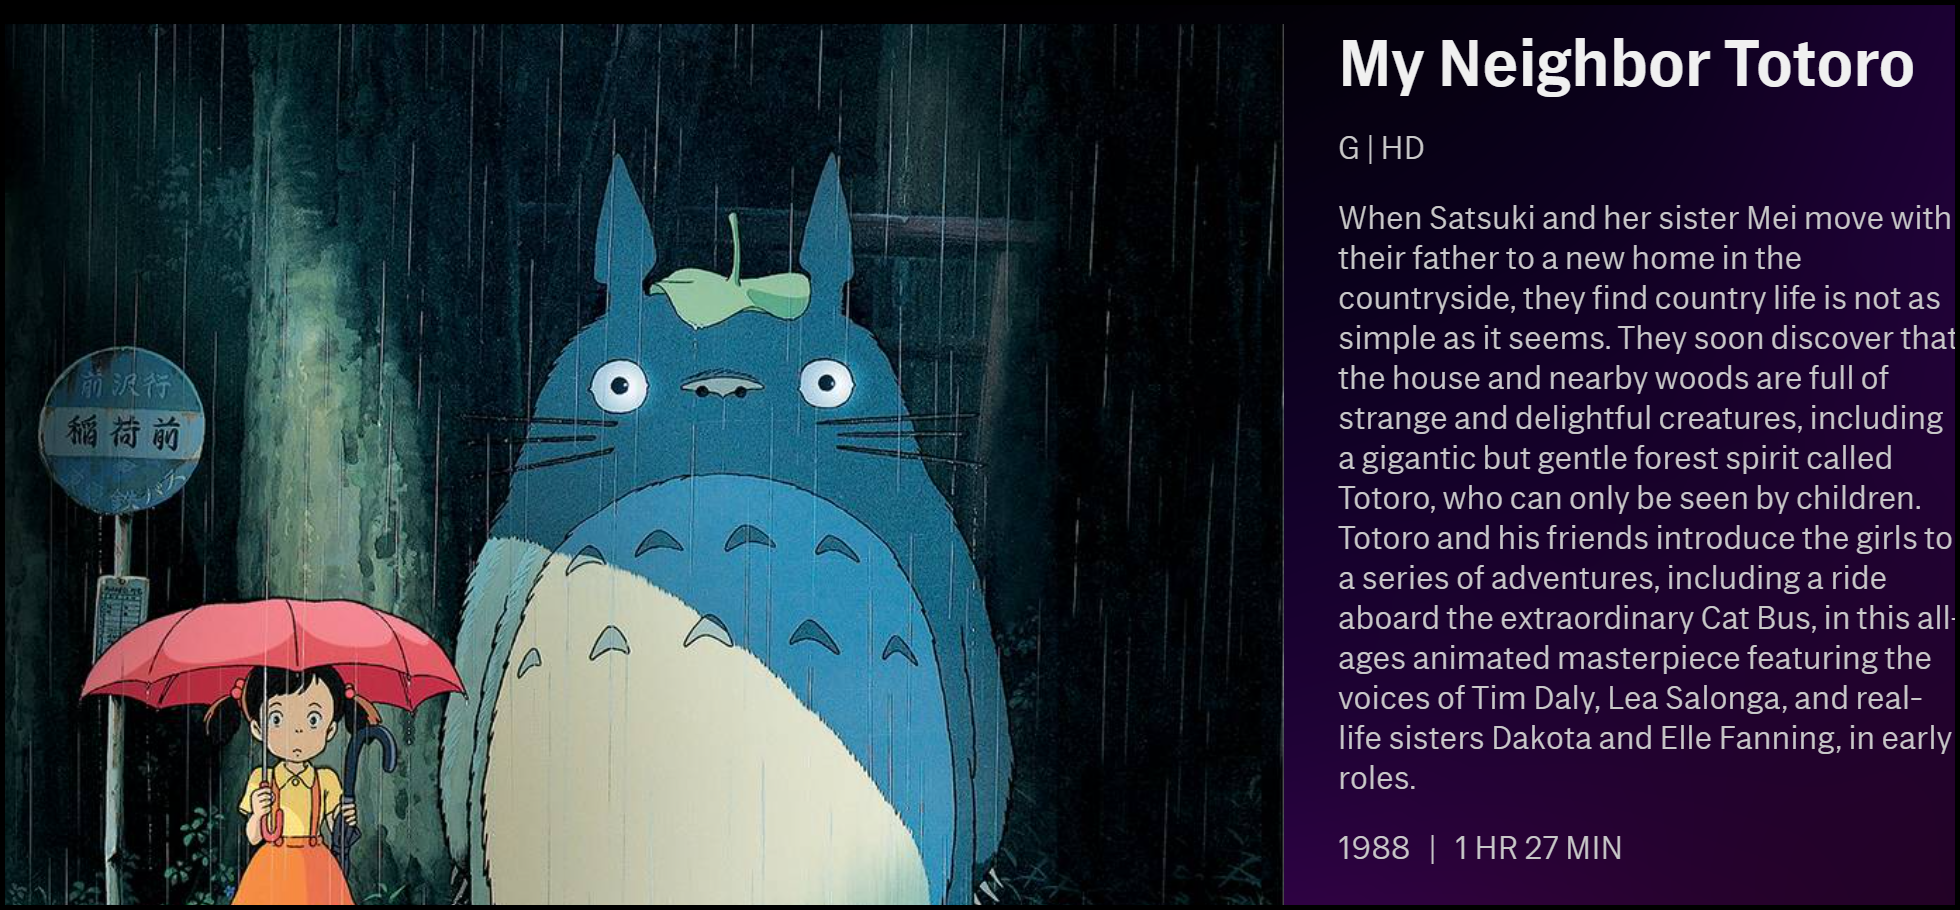 La description de "Mon voisin Totoro" sur HBO Max.